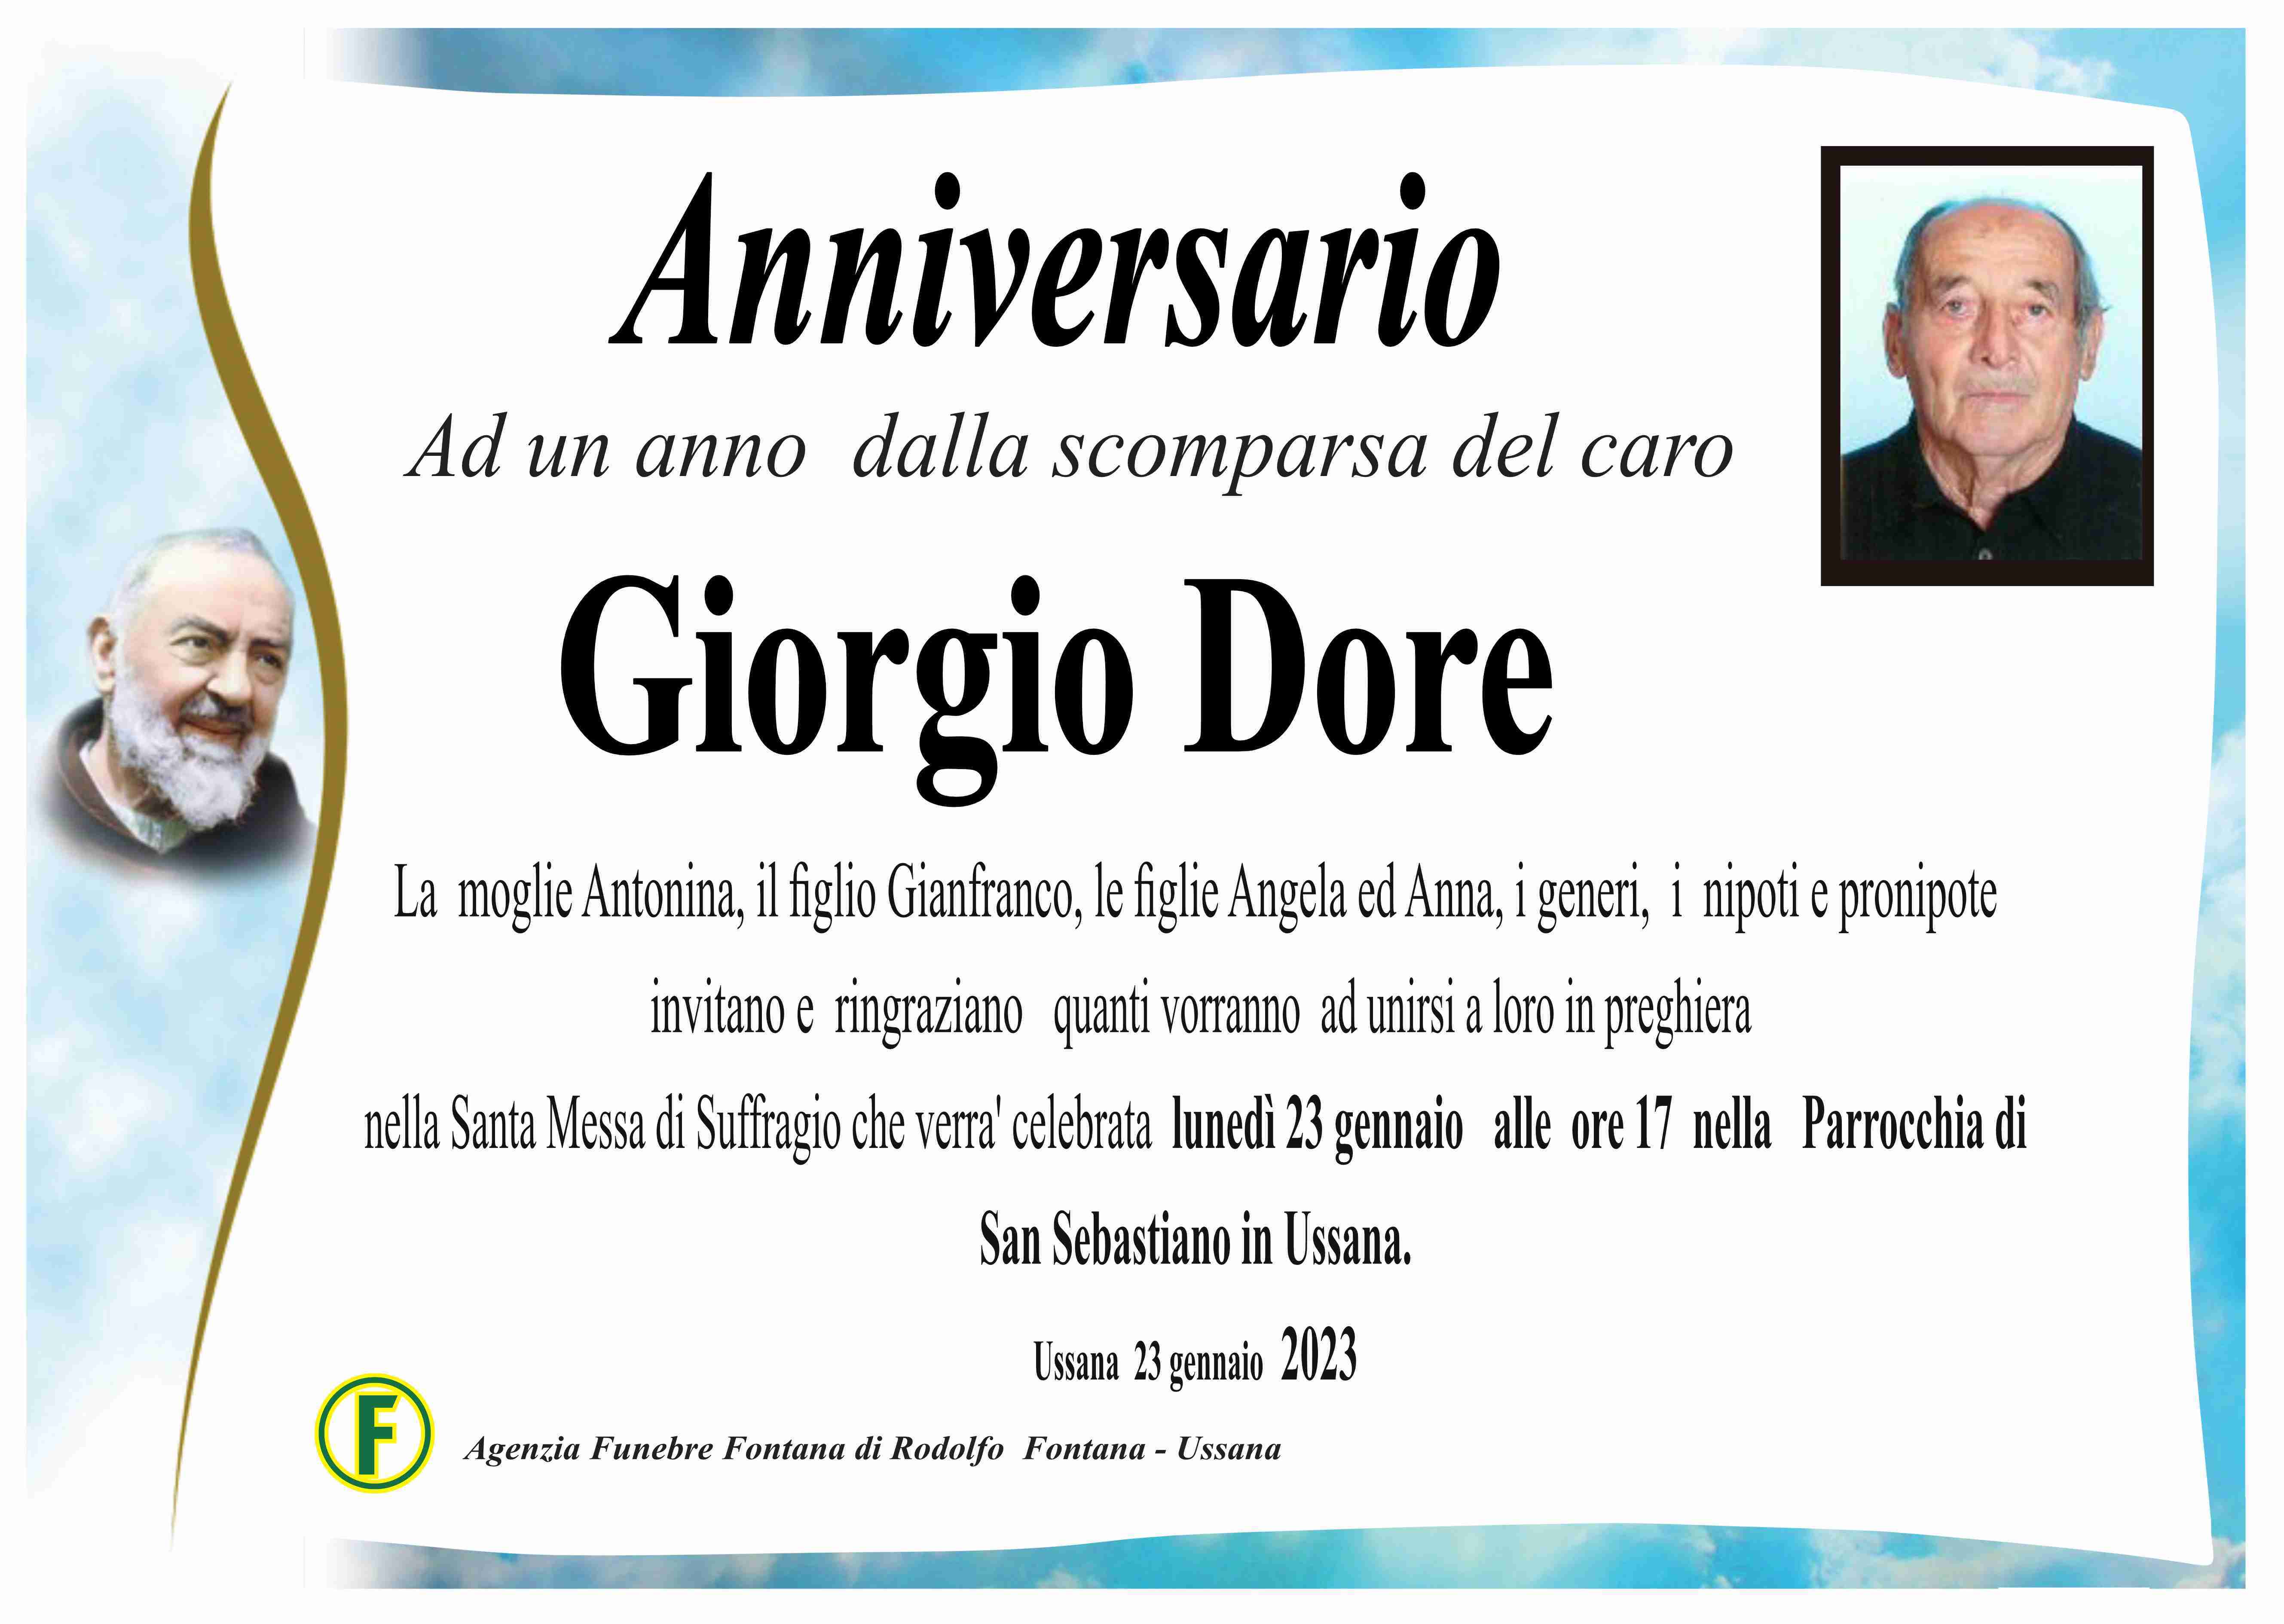 Giorgio Dore